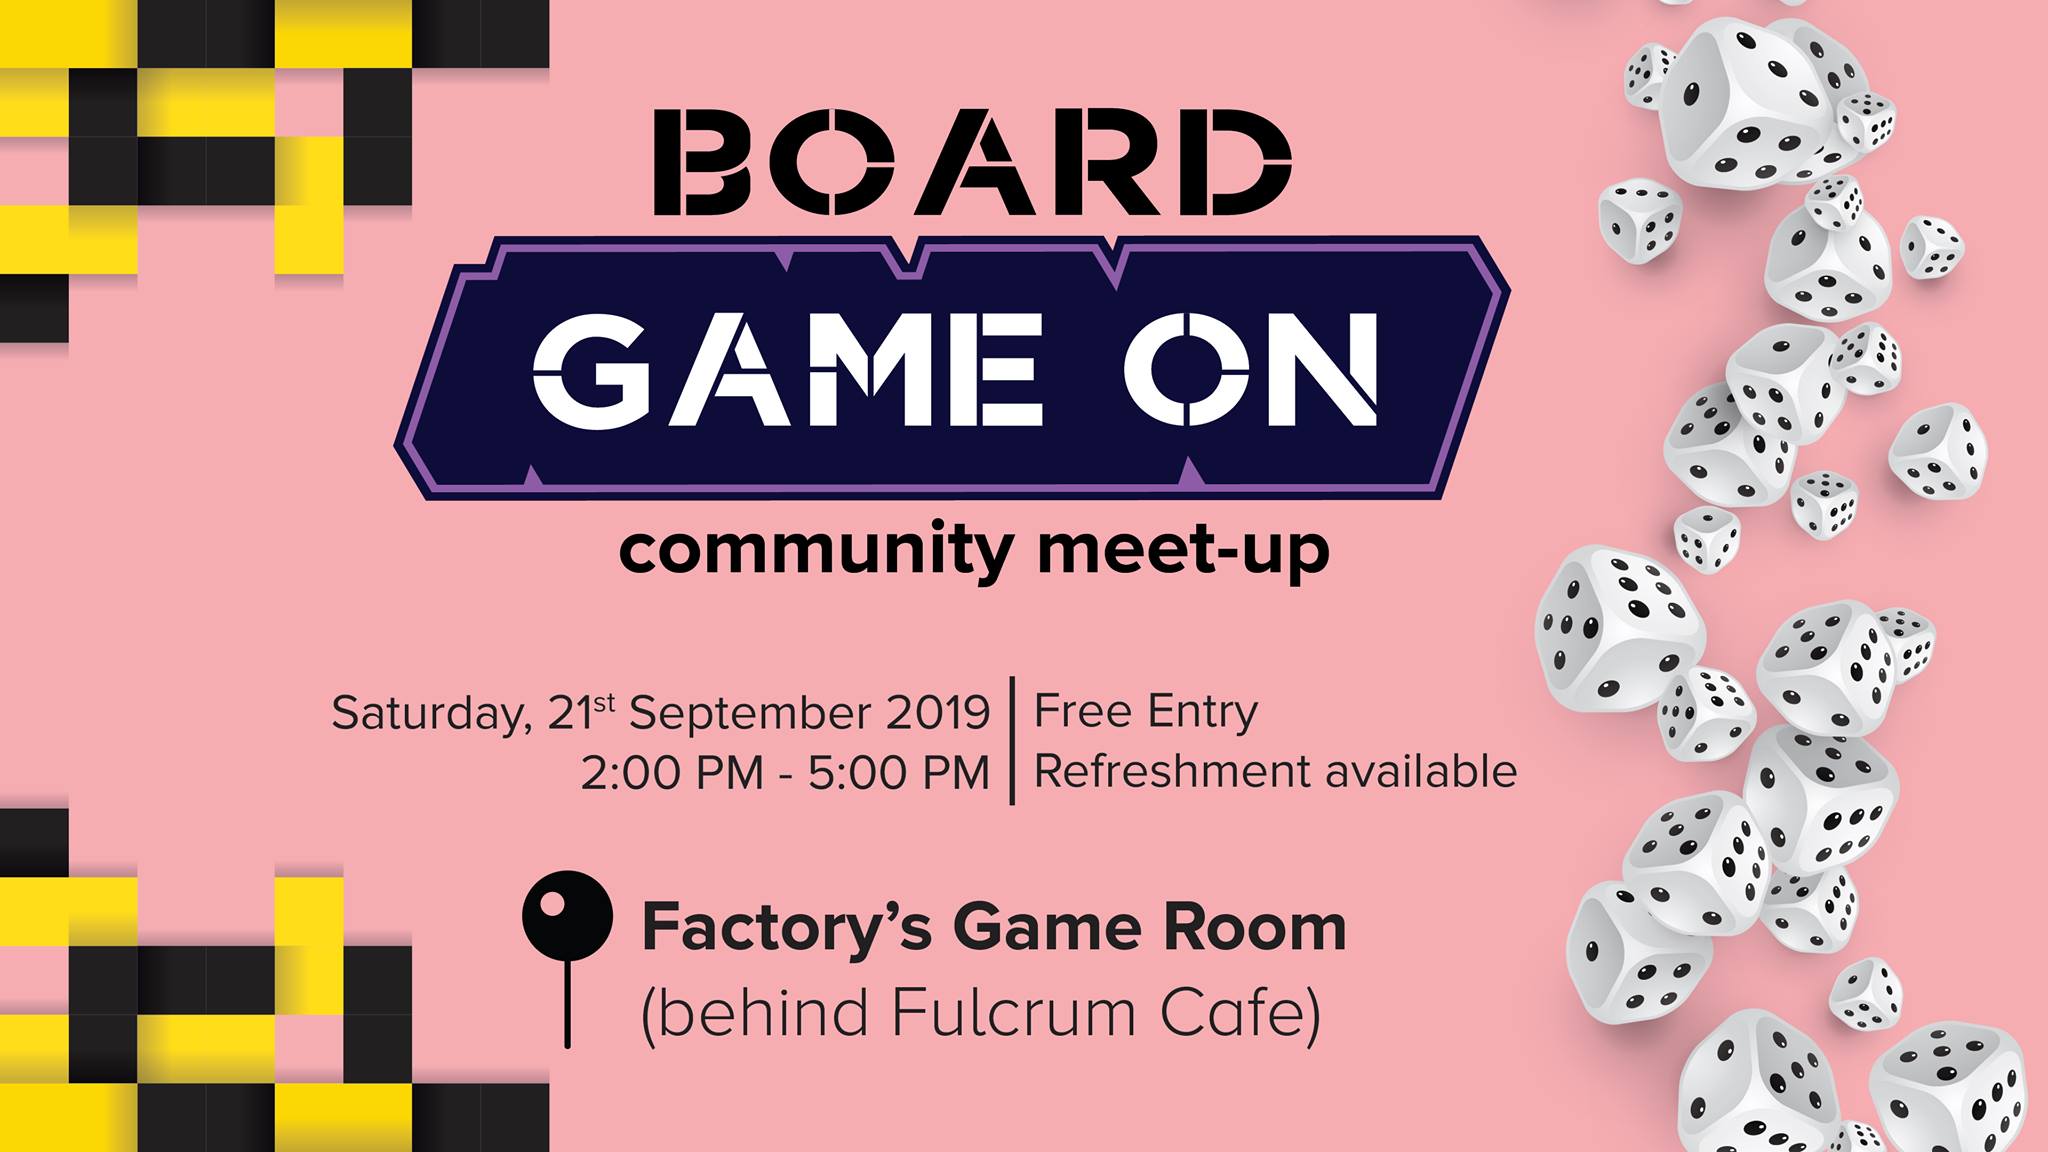 Board Game Meet-Up